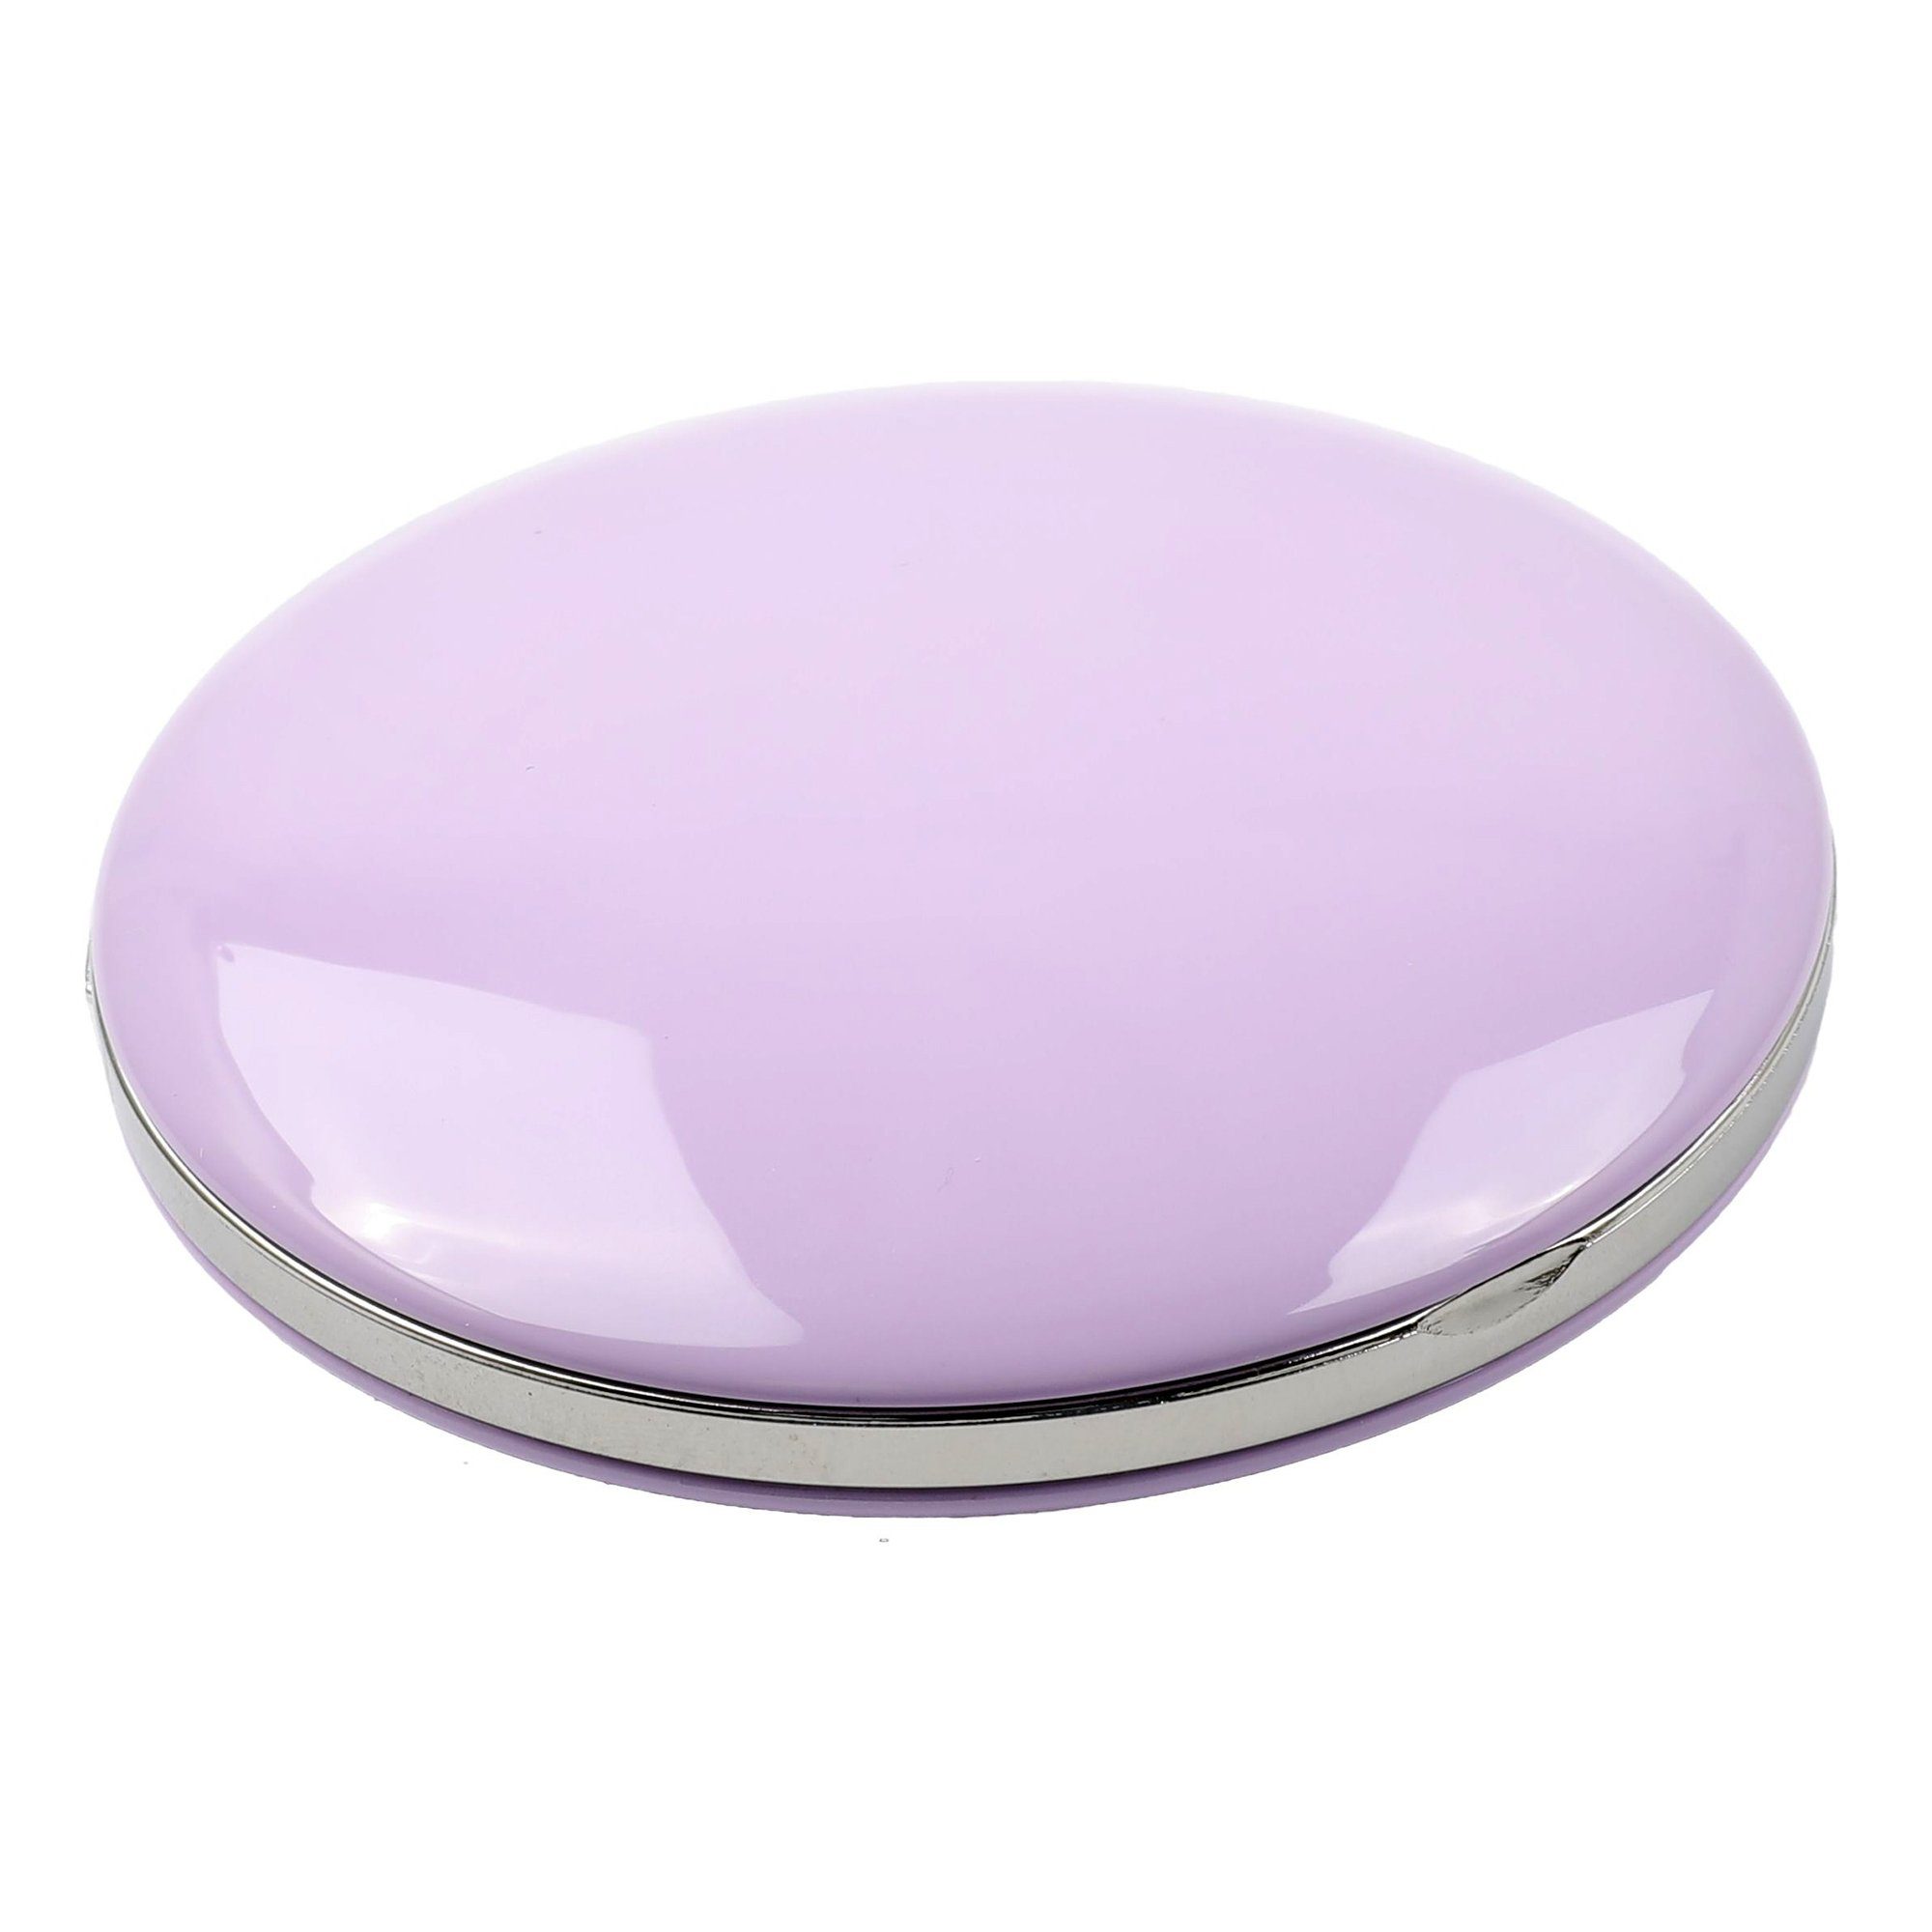 mit | AILORIA Taschenspiegel Kosmetikspiegel (USB) LED-Beleuchtung MAQUILLAGE, lila lila